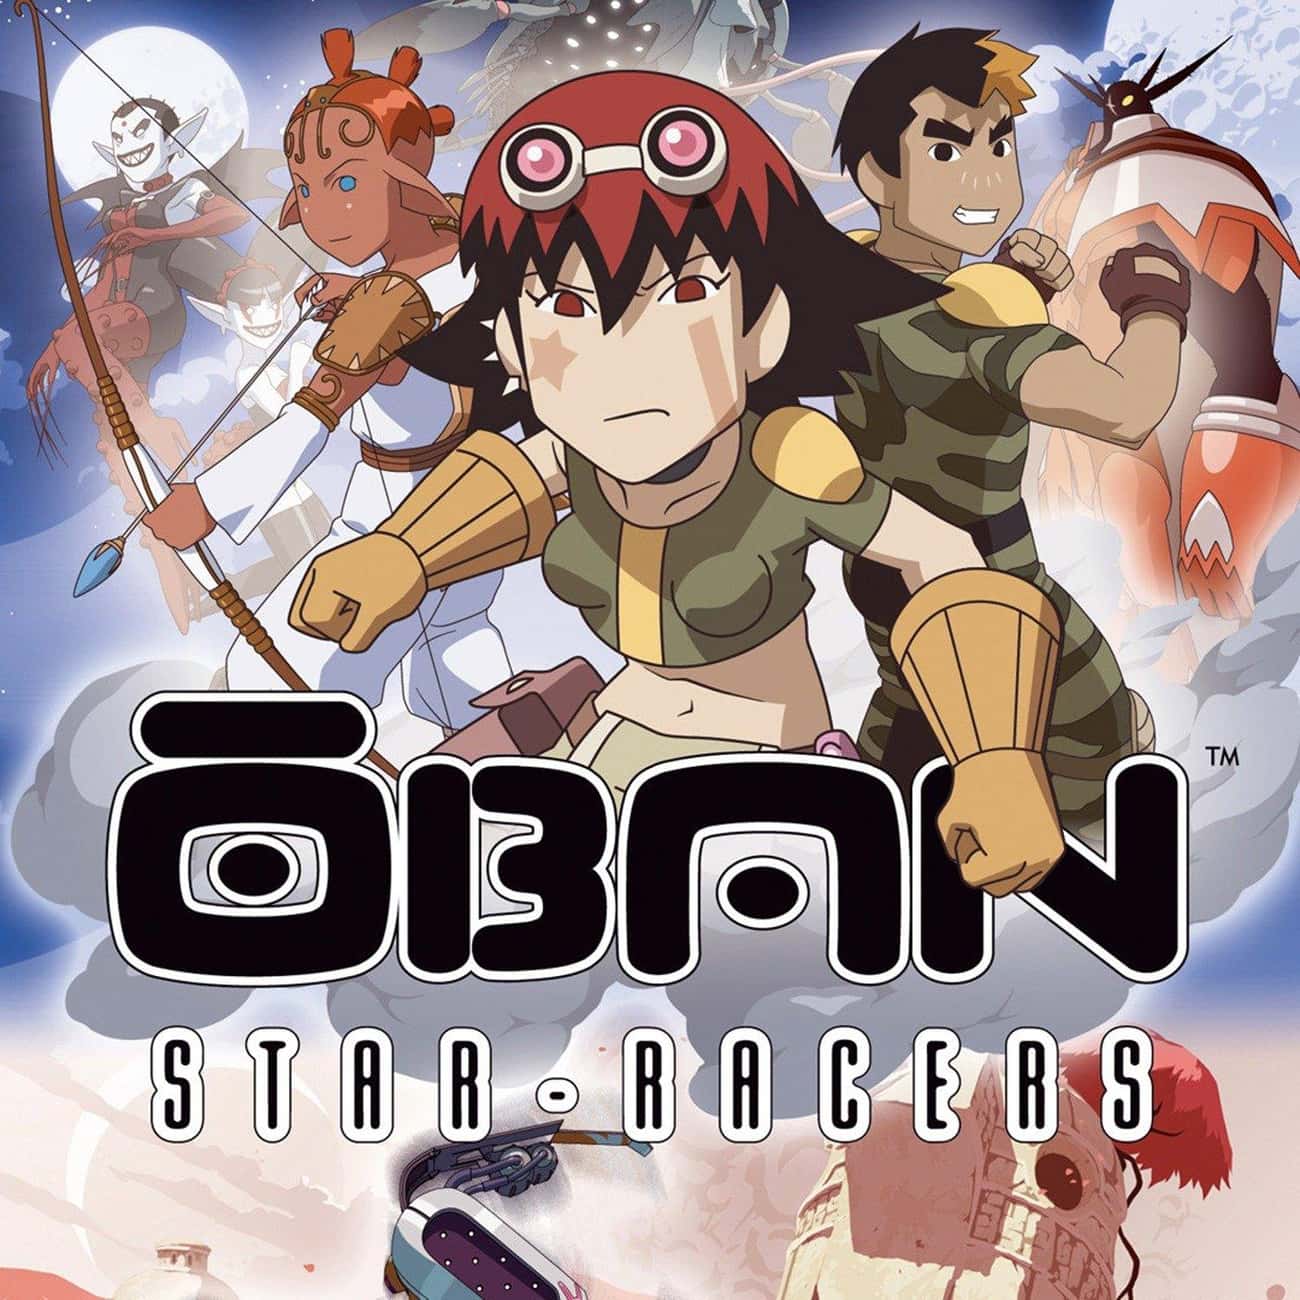 Ōban Star-Racers